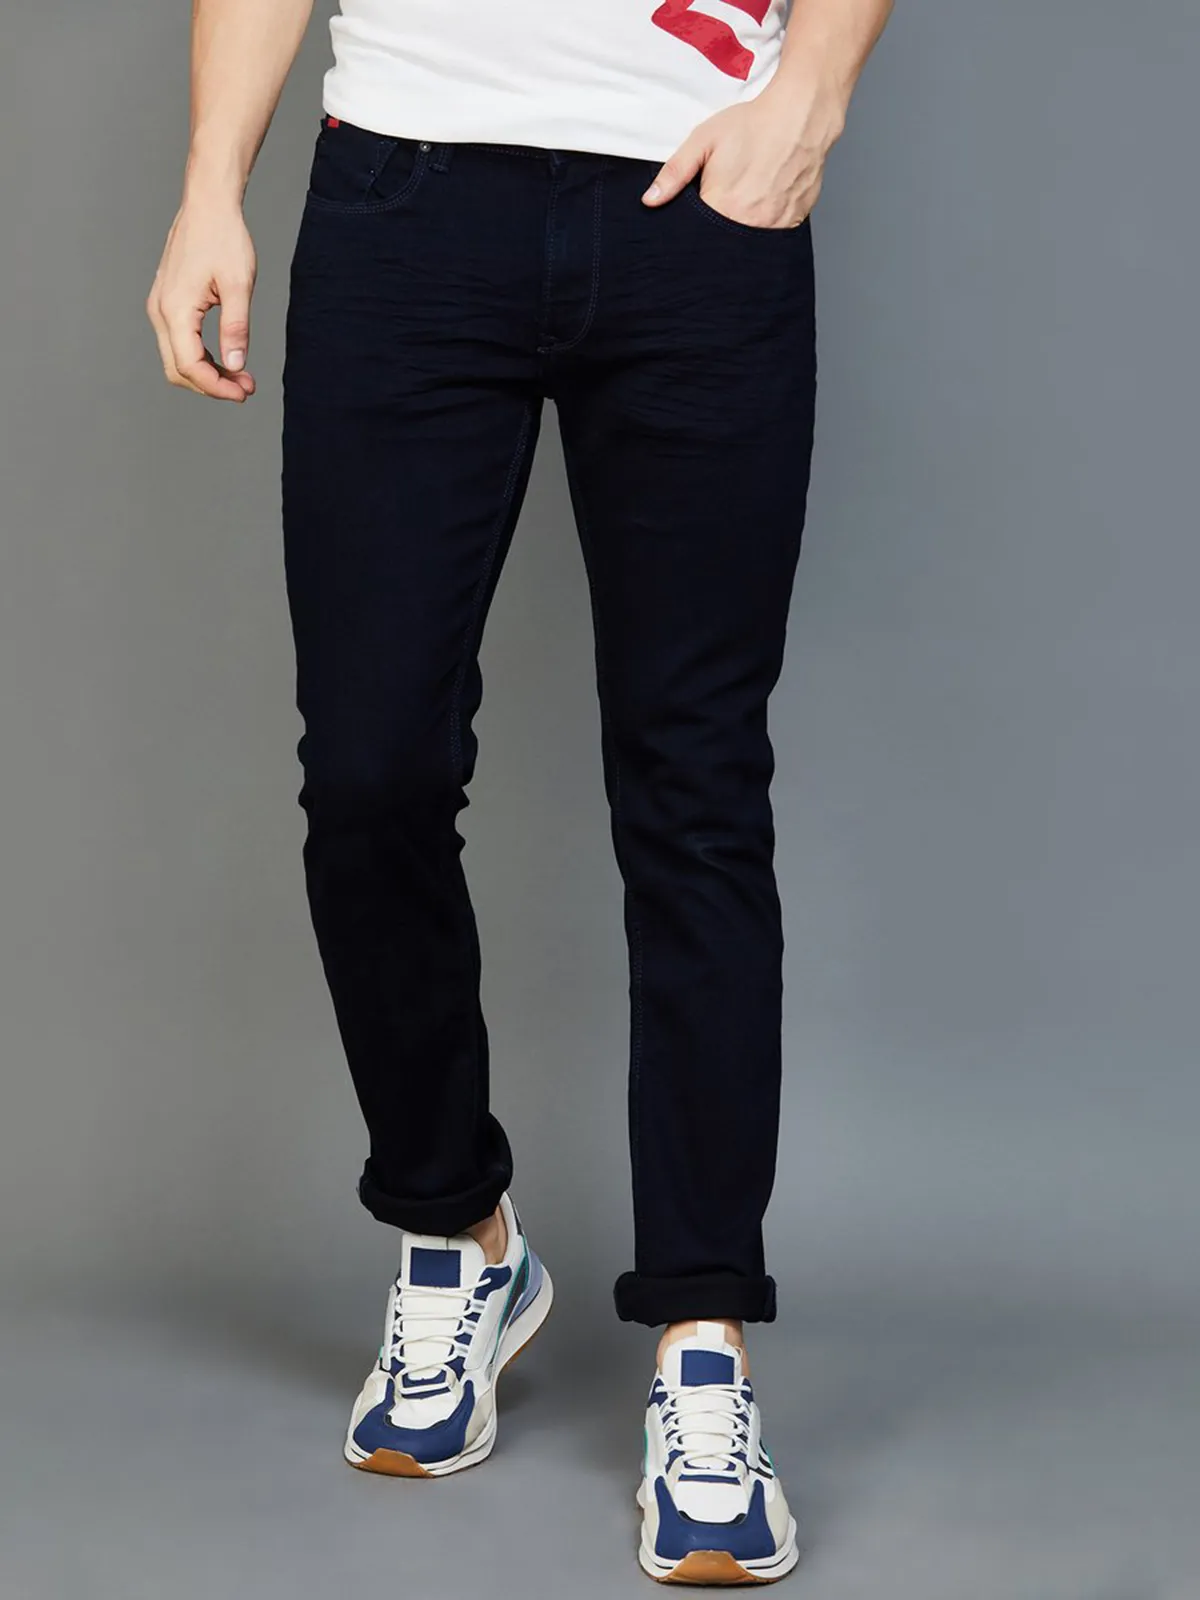 Spykar dark navy slim fit jeans in solid